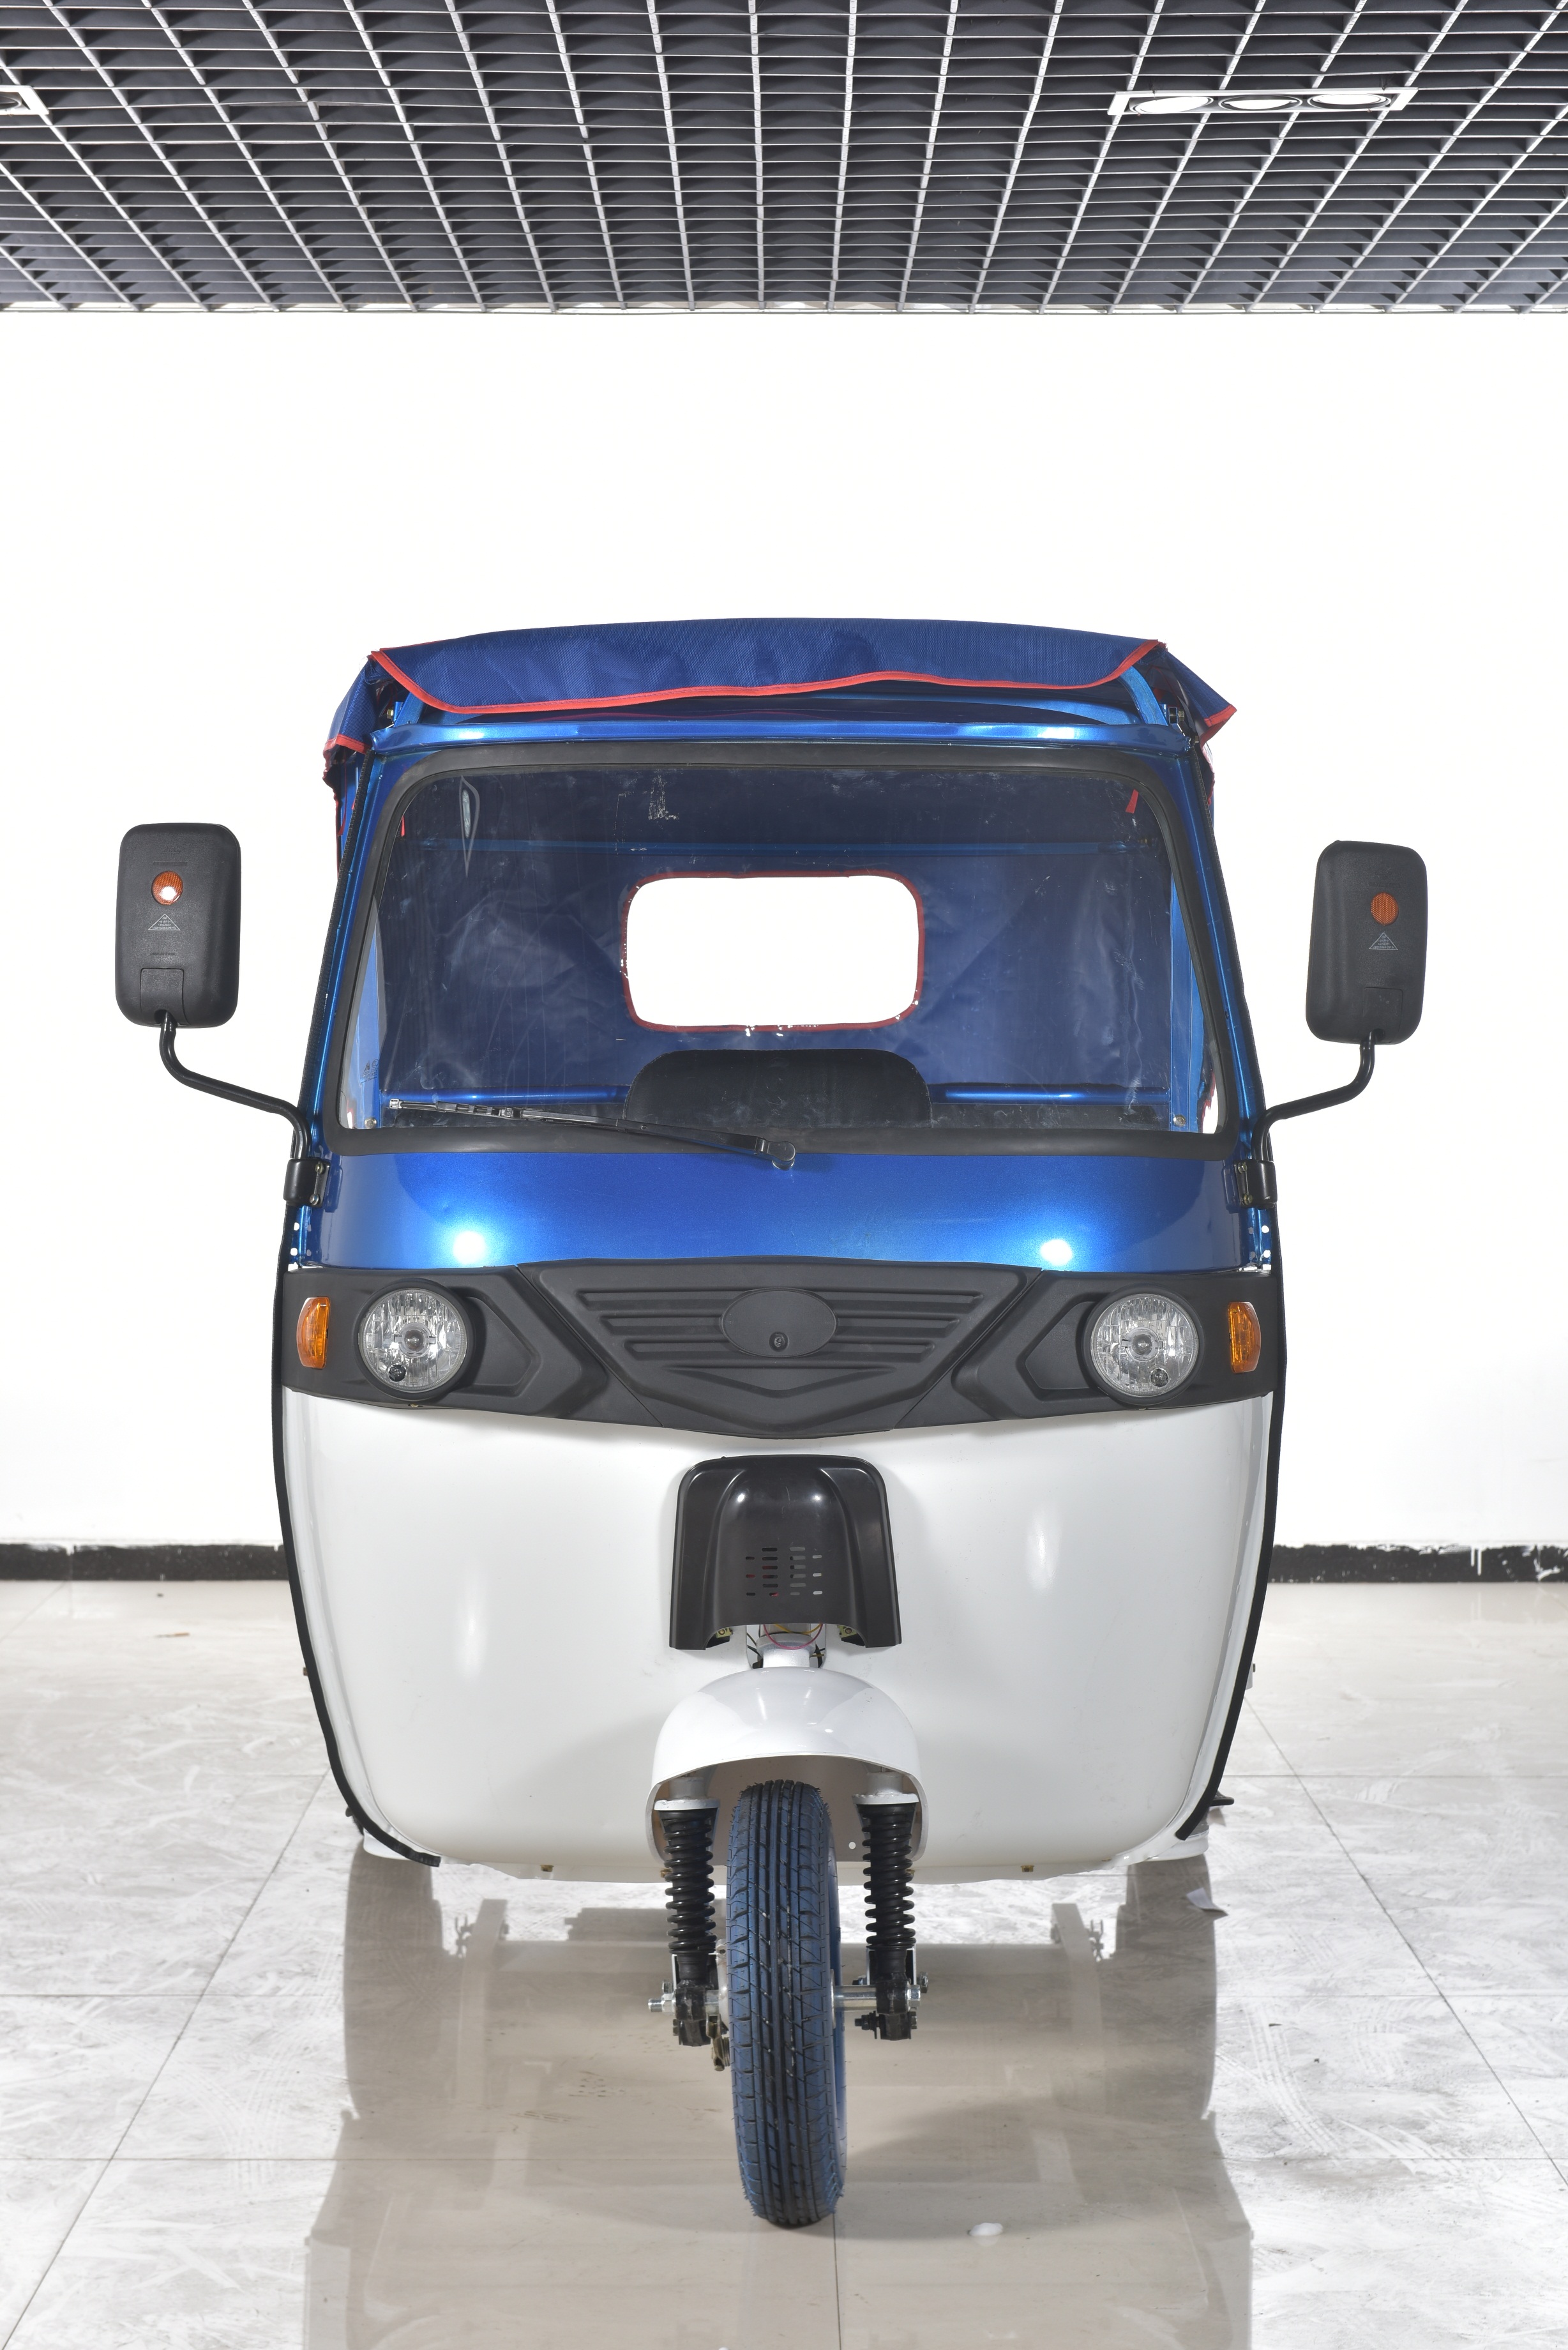 Lithium battery auto rickshaw 4000w power e-rickshaws ECO friendly electric passenger tricycle